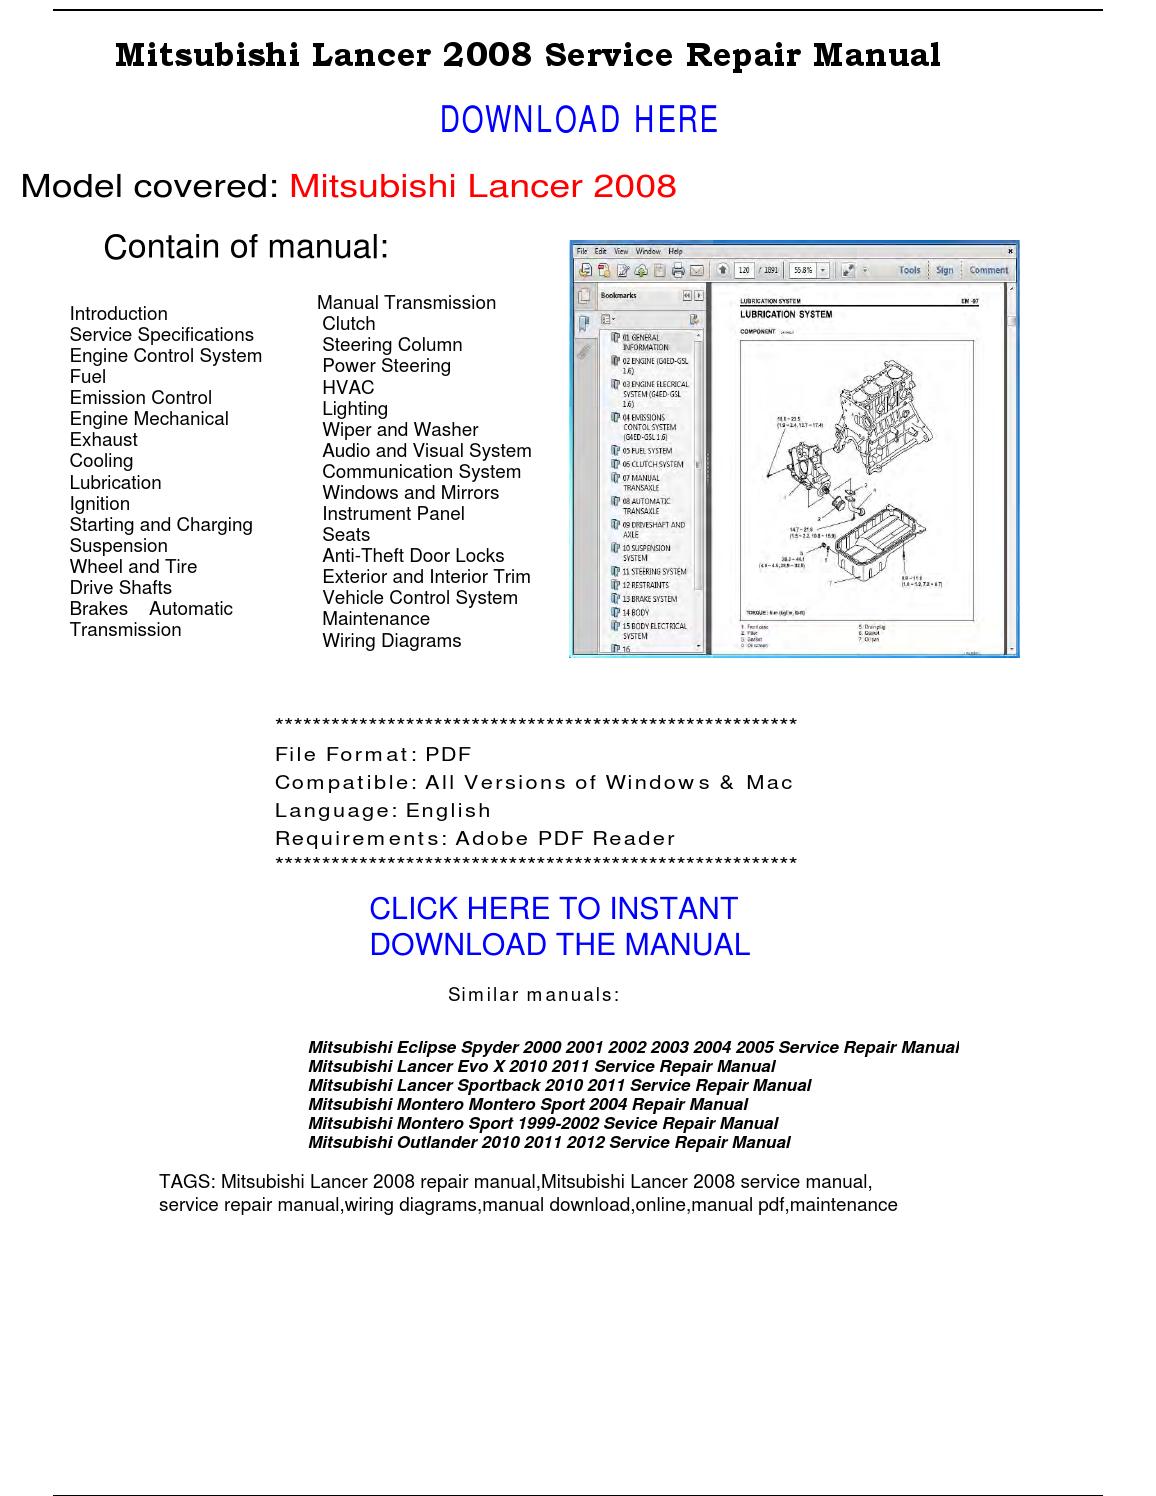 2002 mitsubishi montero sport repair manual pdf free download full